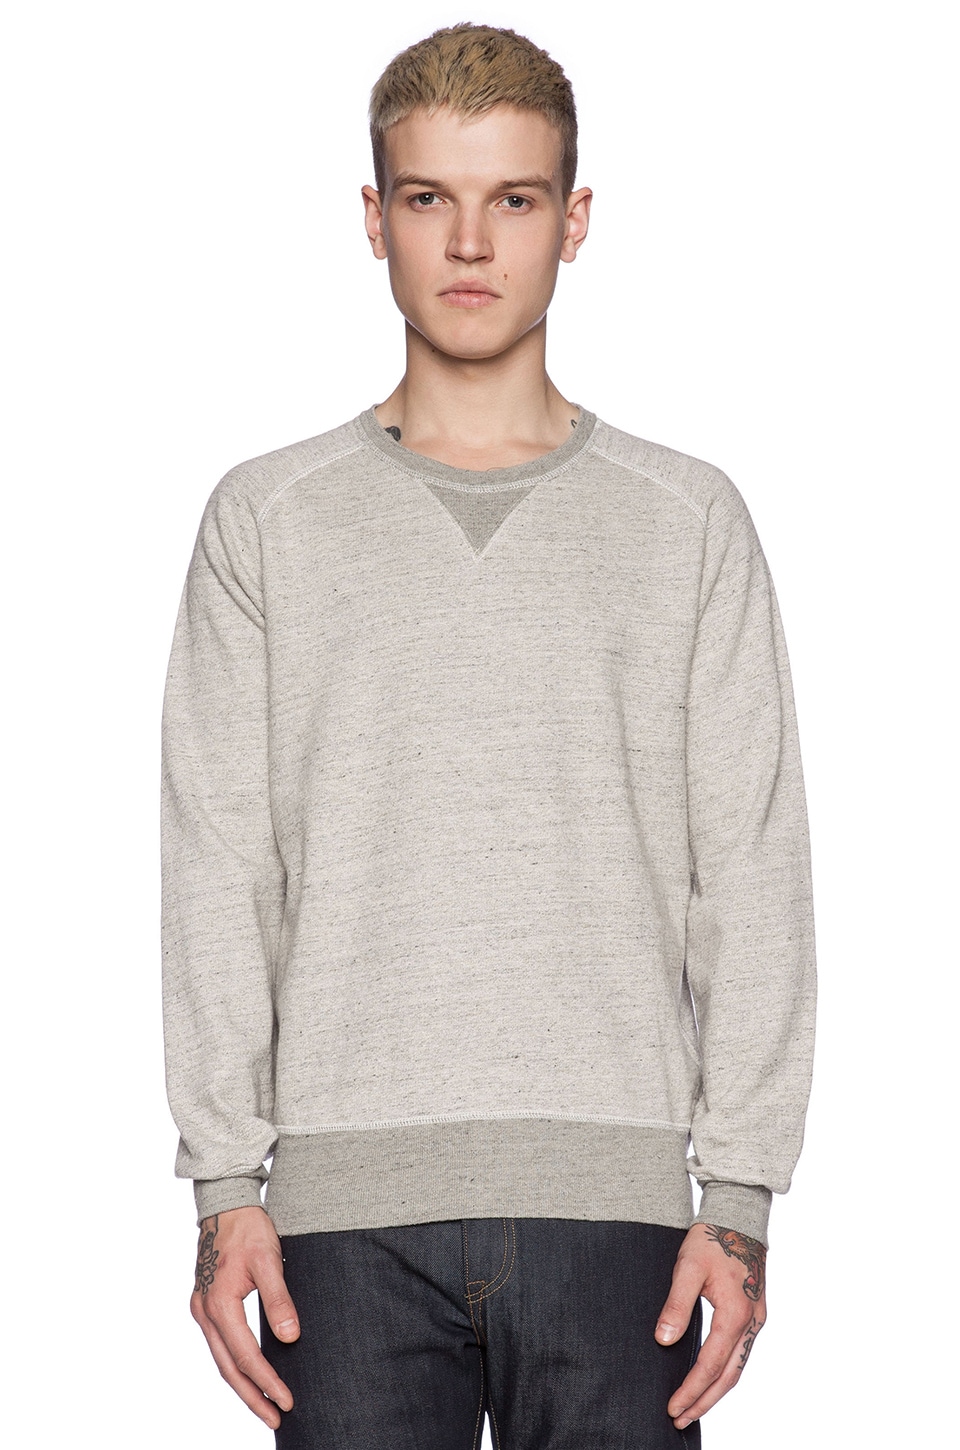 LEVI'S Vintage Clothing 1950's Crew Sweatshirt in Grey Mele | REVOLVE